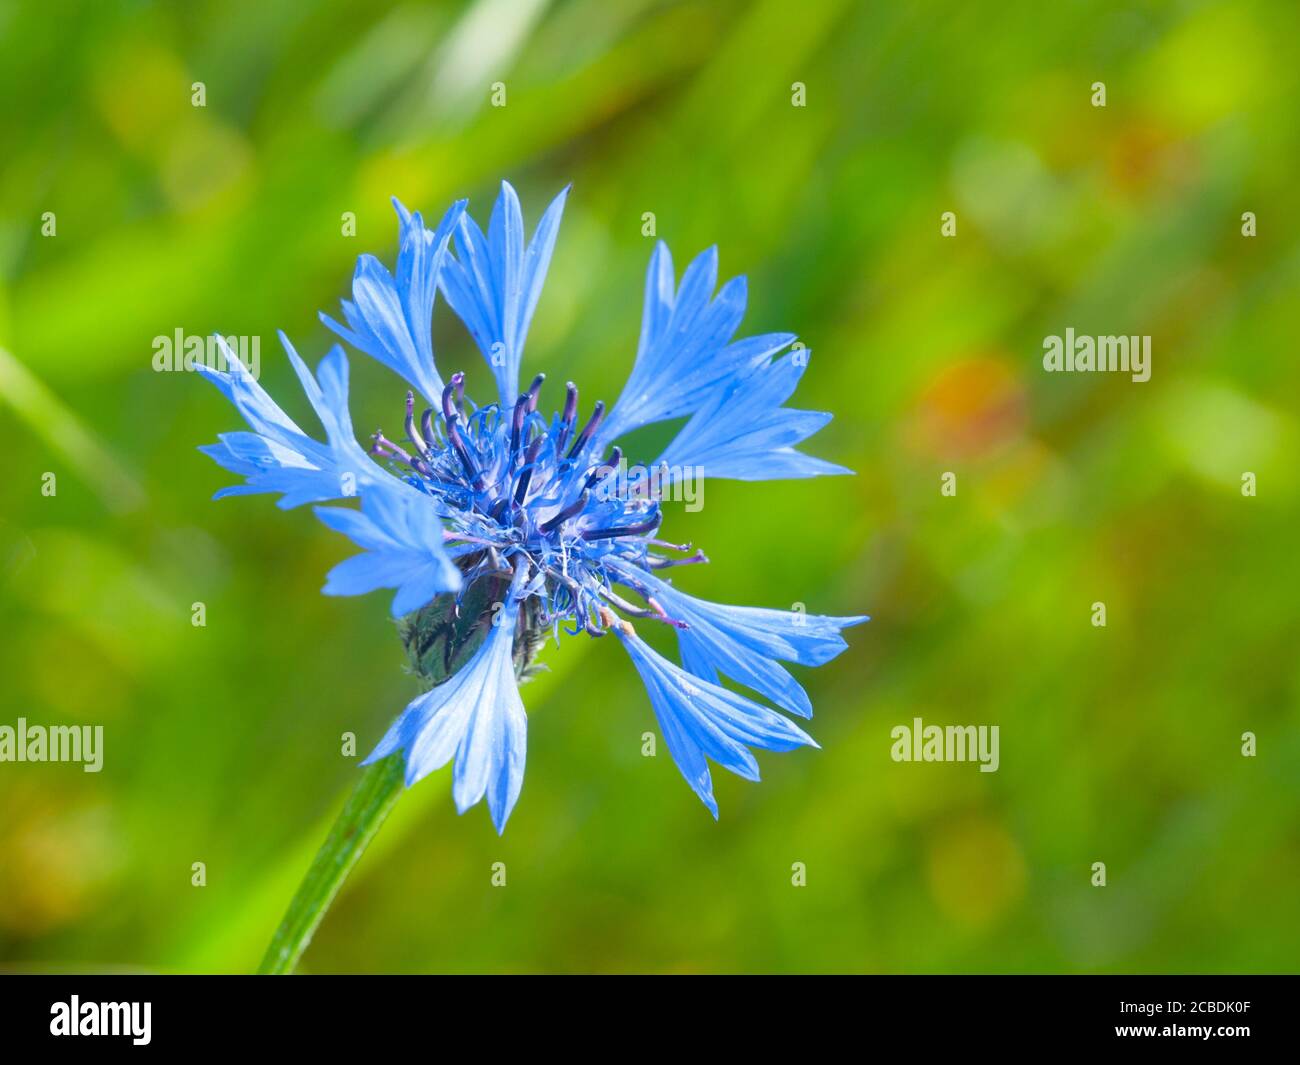 Wild blue cornflower, or Centaurea cyanus, on green bokeh natural background. Shallow depth of field. Stock Photo